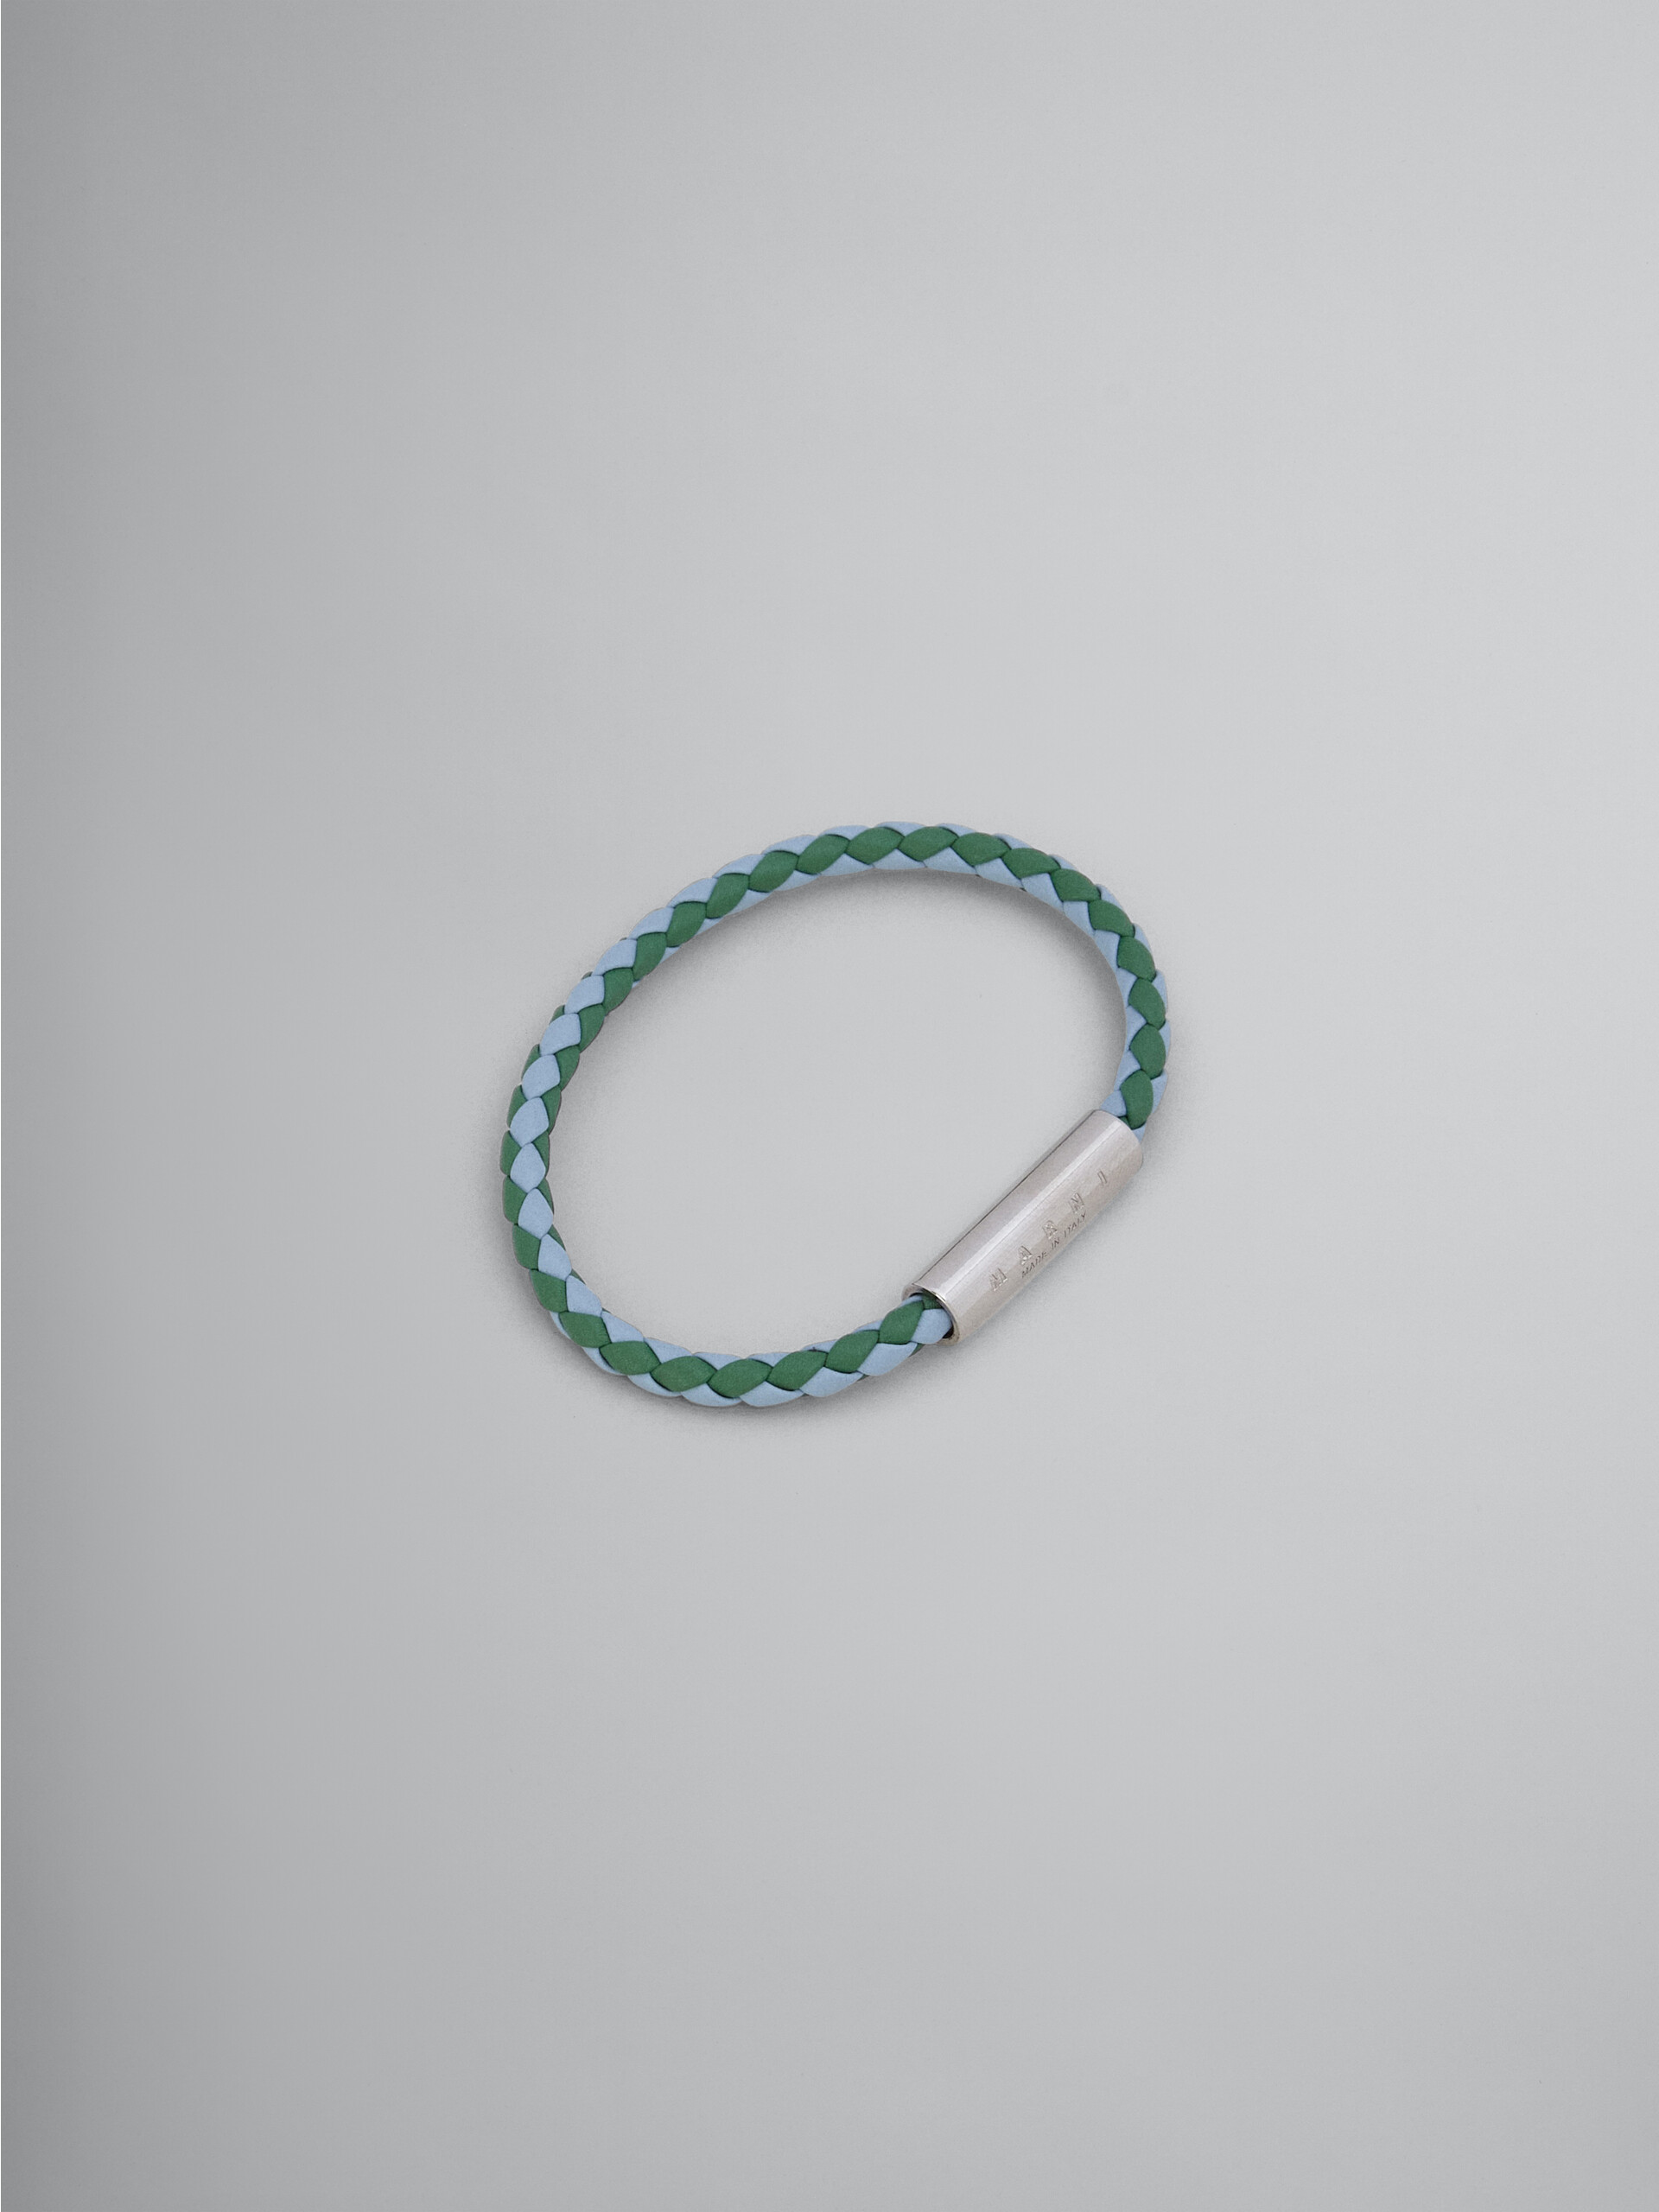 Green and light blue braided leather bracelet - Bracelets - Image 1